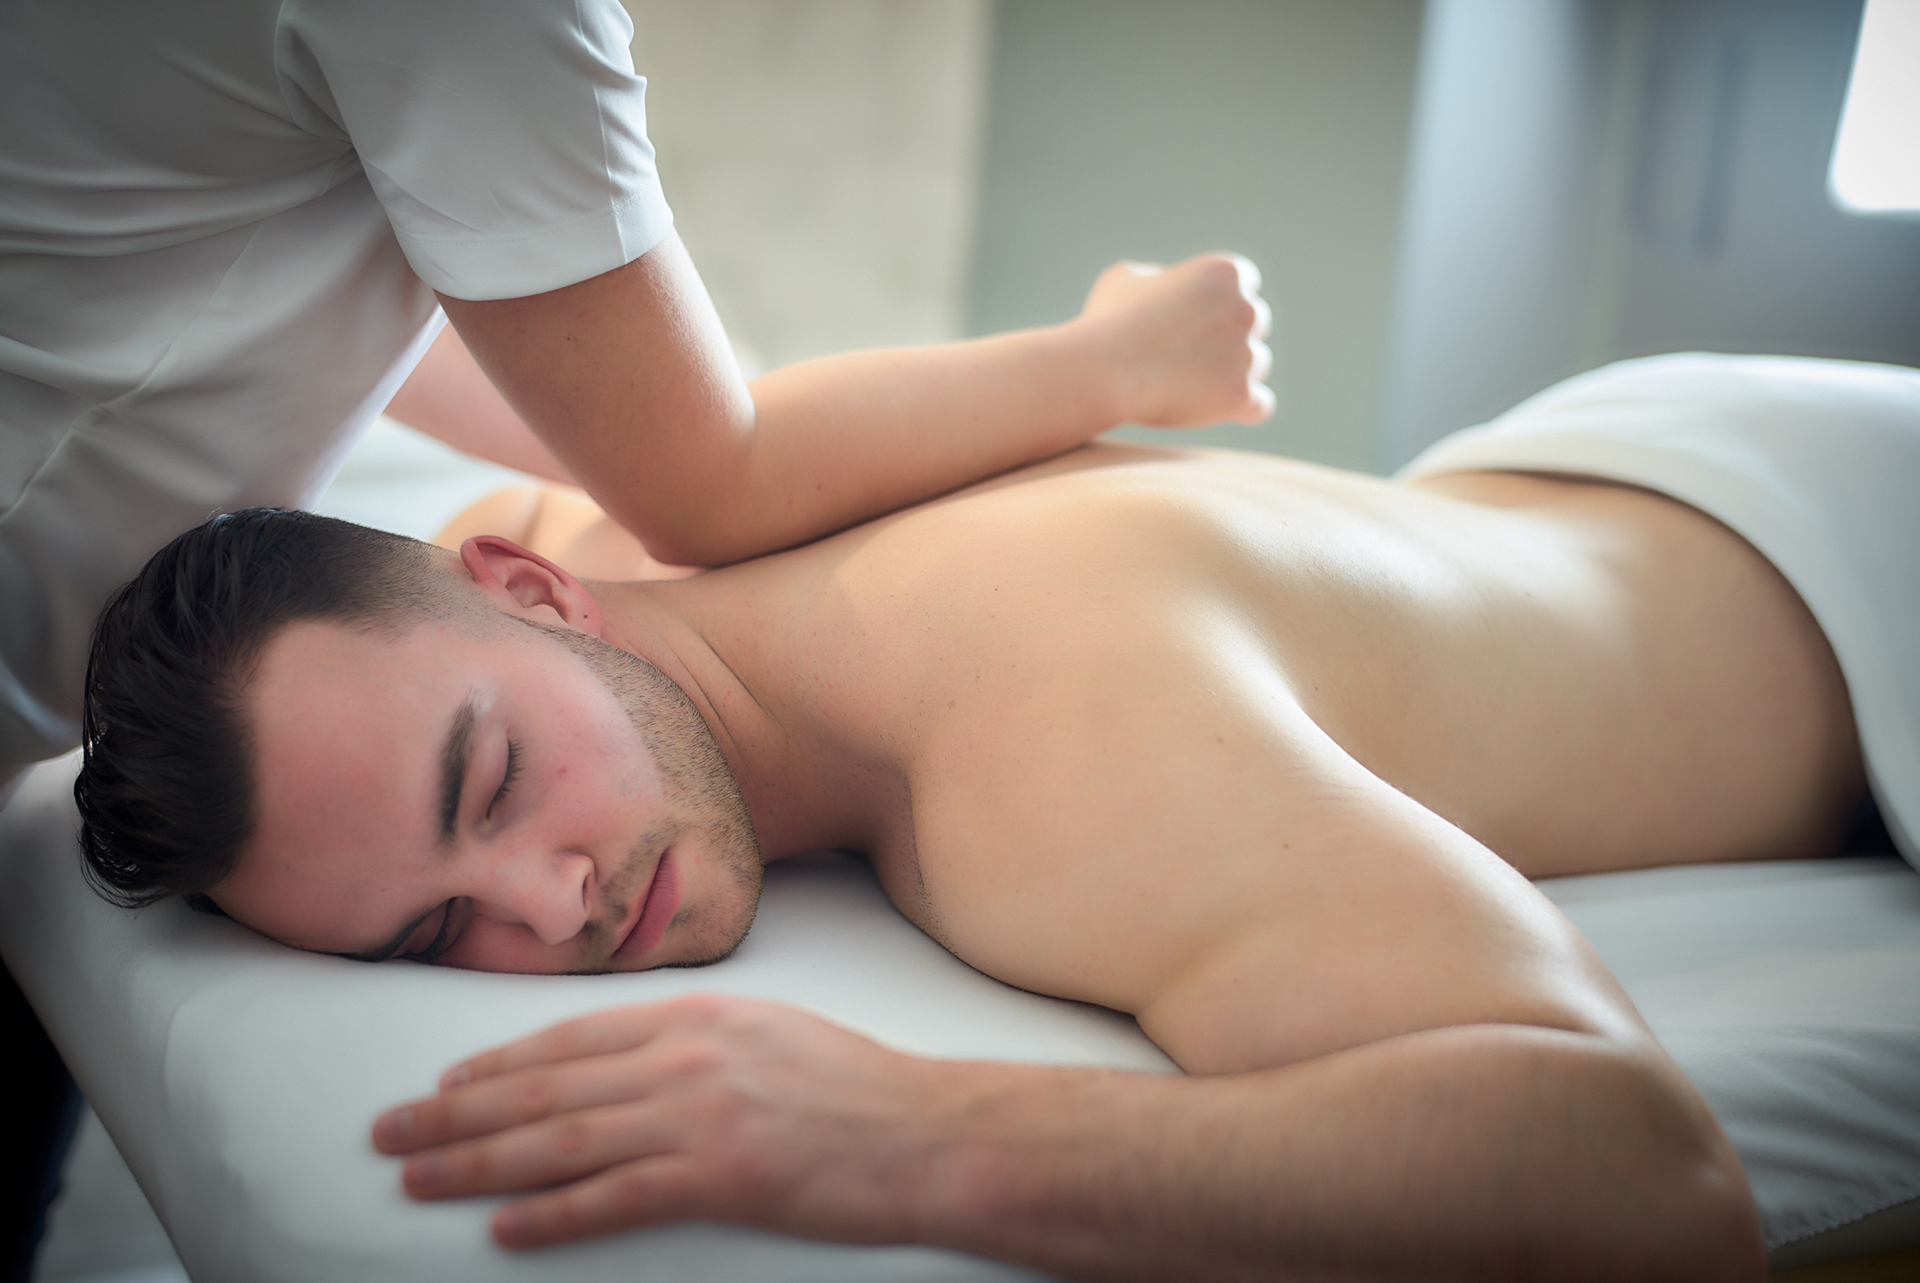 Swedish massage vs. therapeutic massage: what differences?